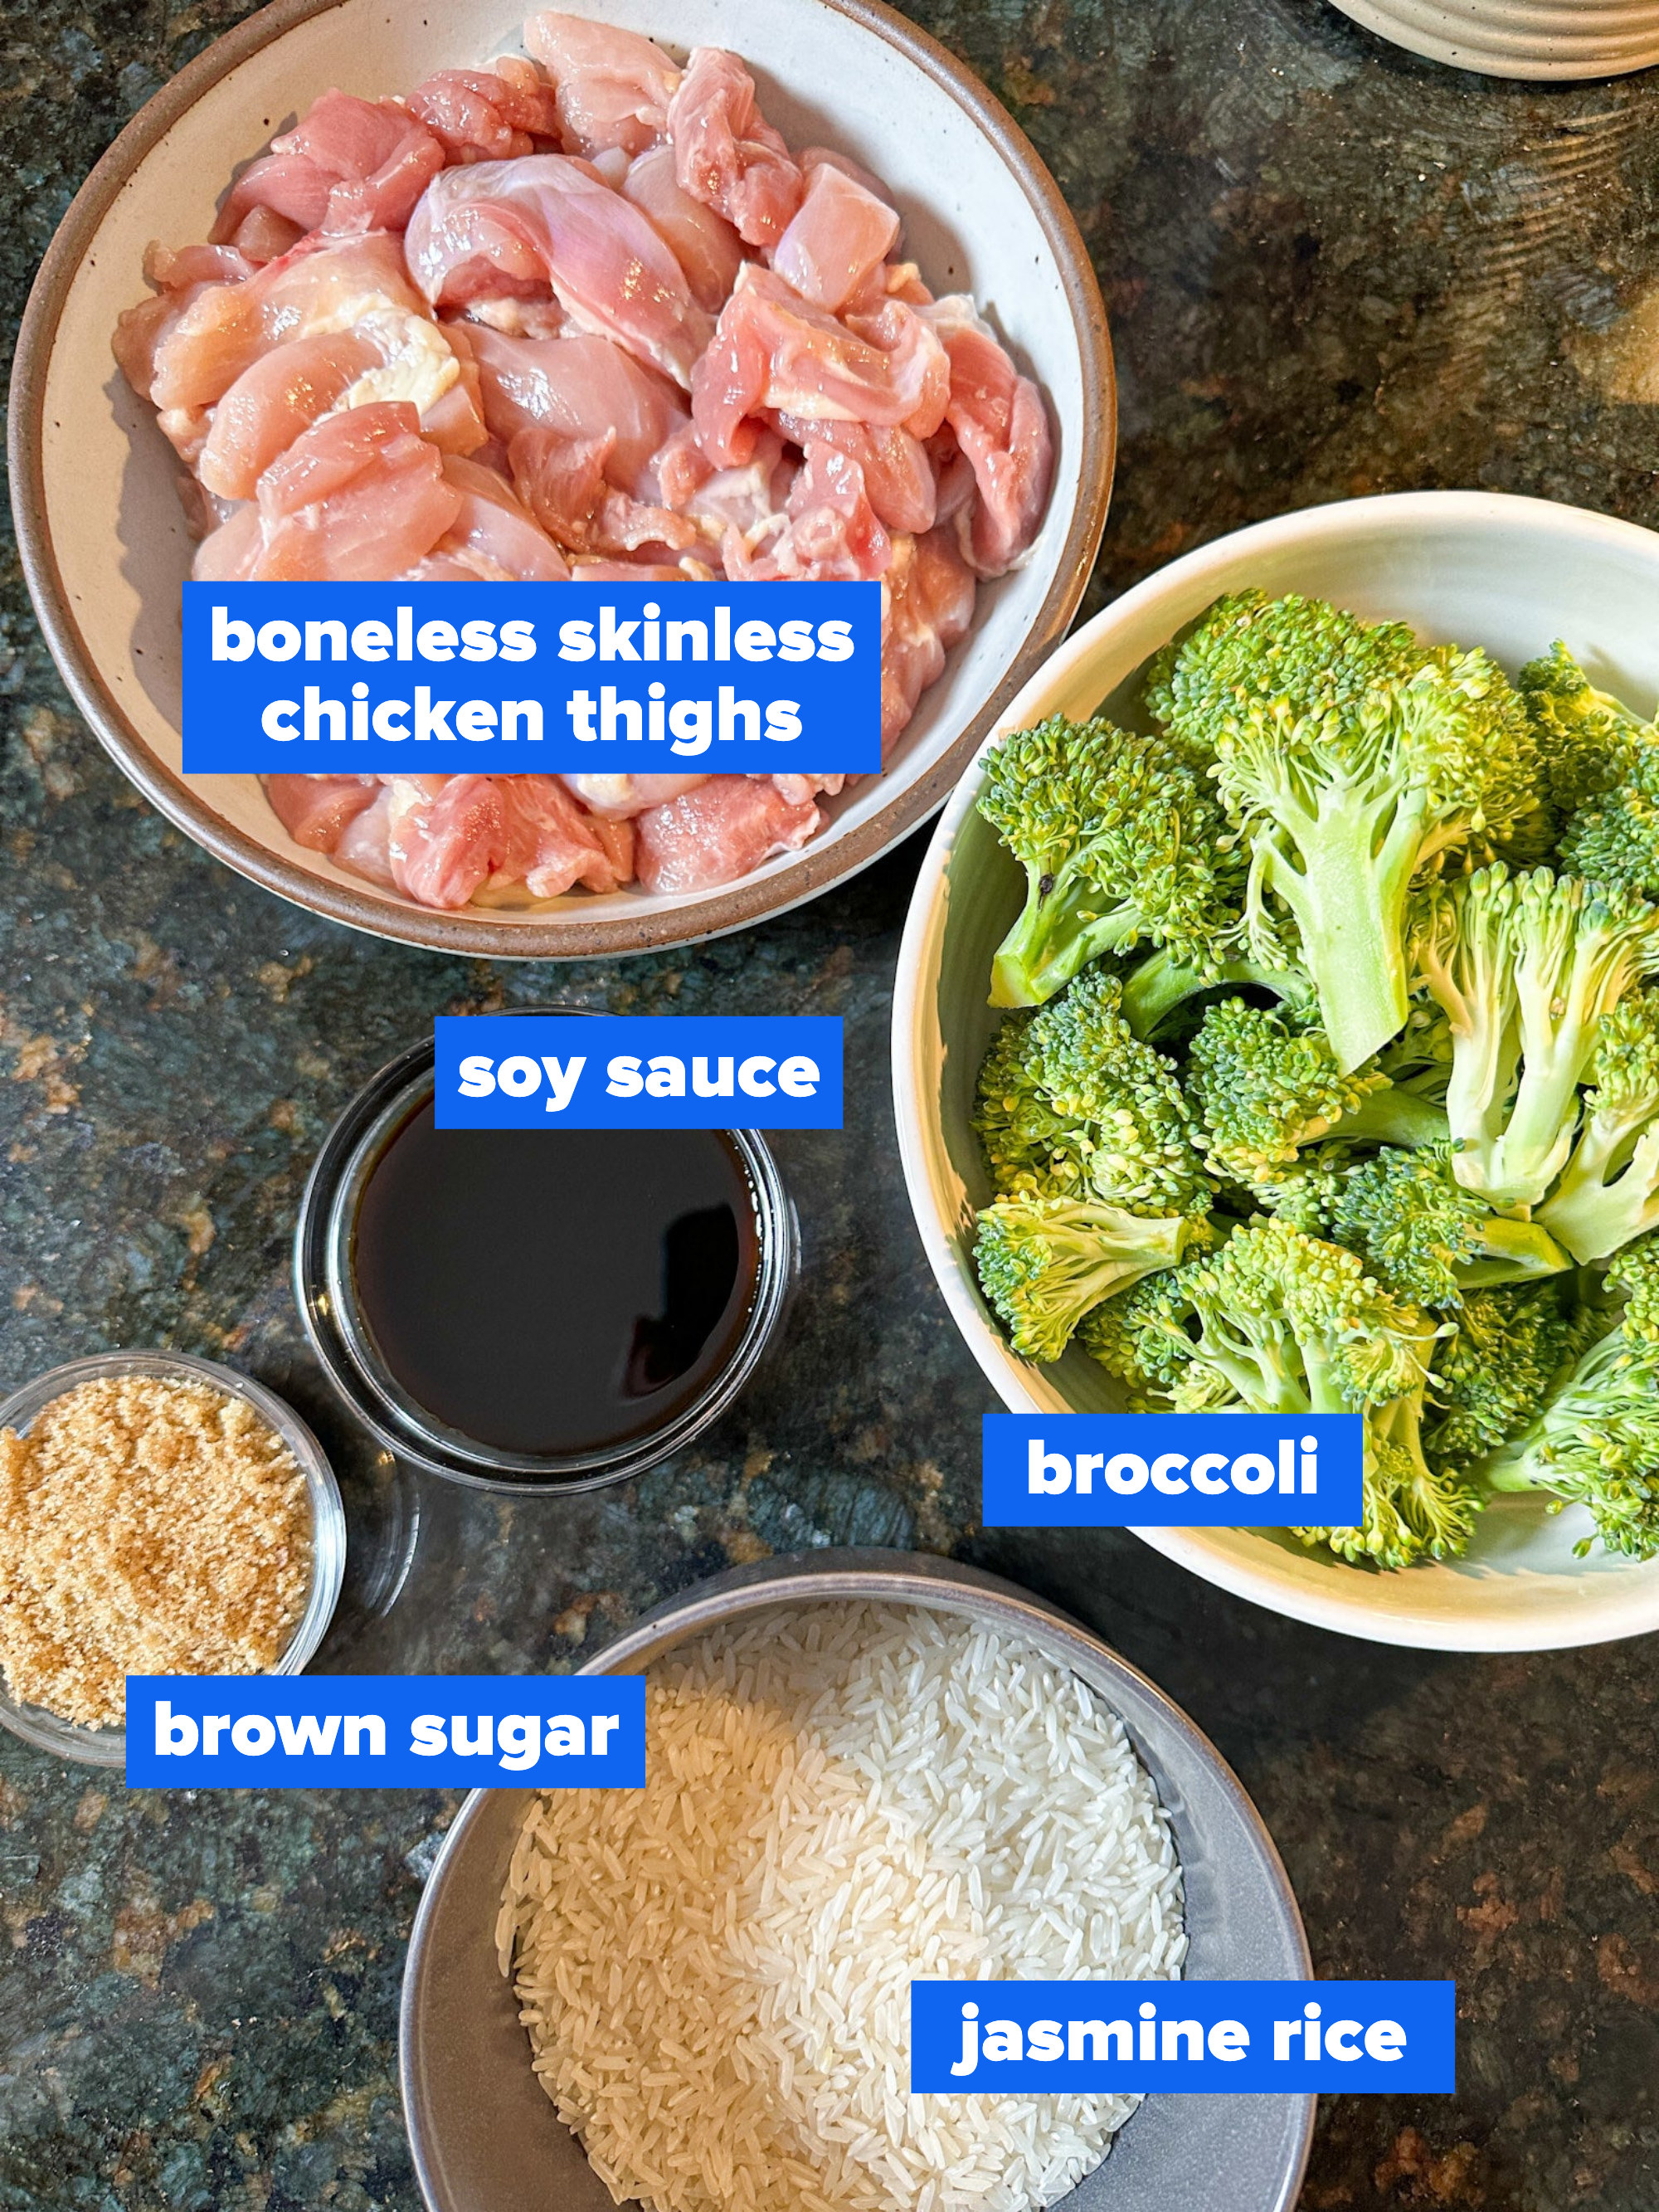 the ingredients: boneless skinless chicken thighs, soy sauce, broccoli, brown sugar, jasmine rice